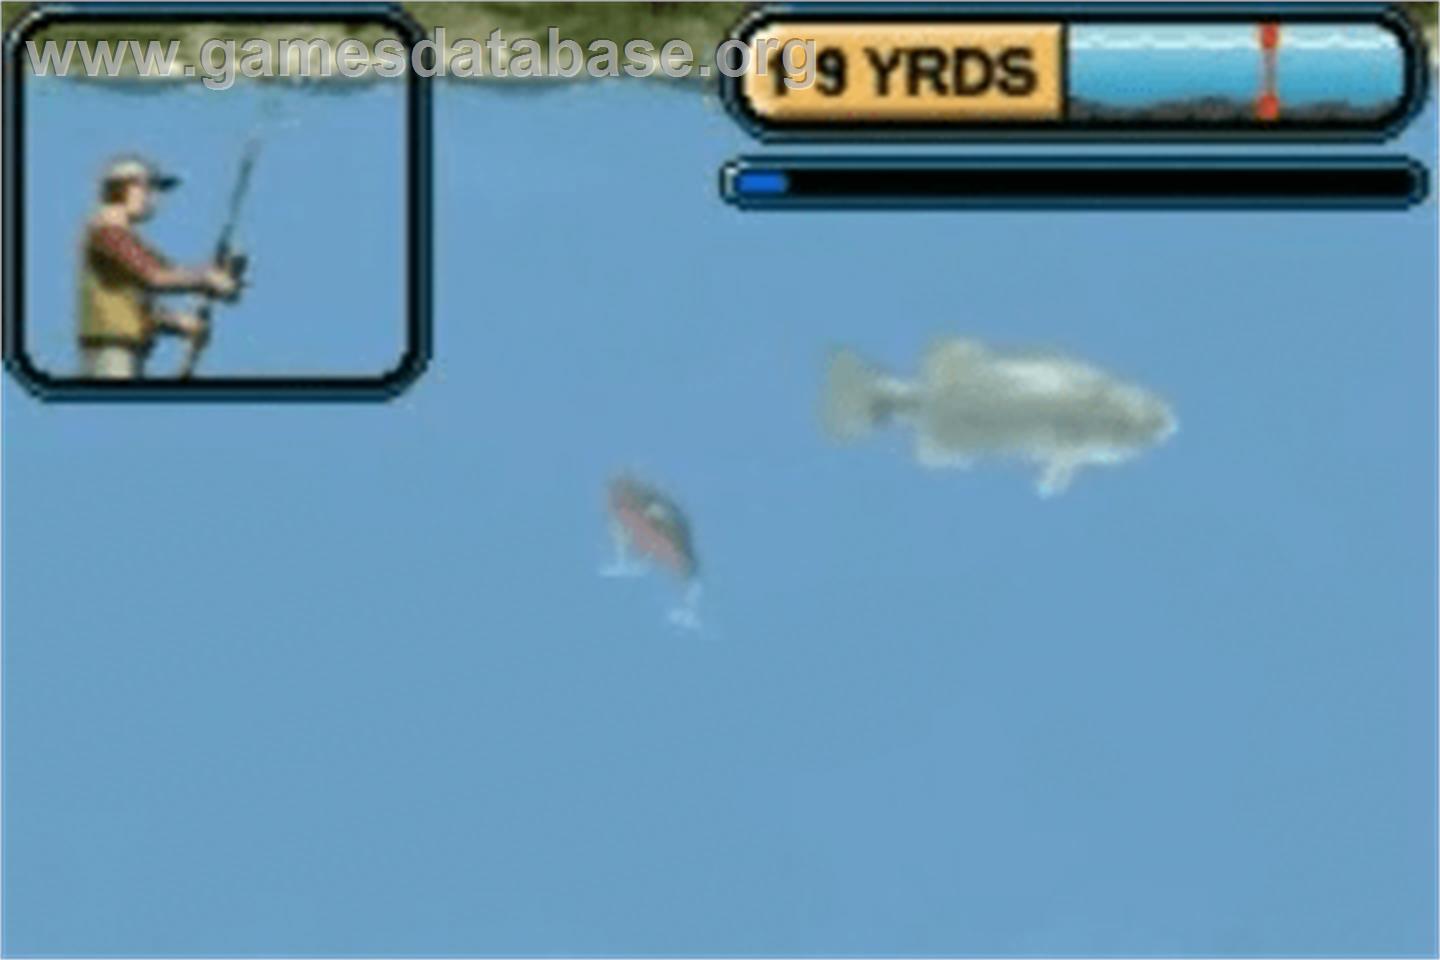 Rapala Pro Fishing - Nintendo Game Boy Advance - Artwork - In Game